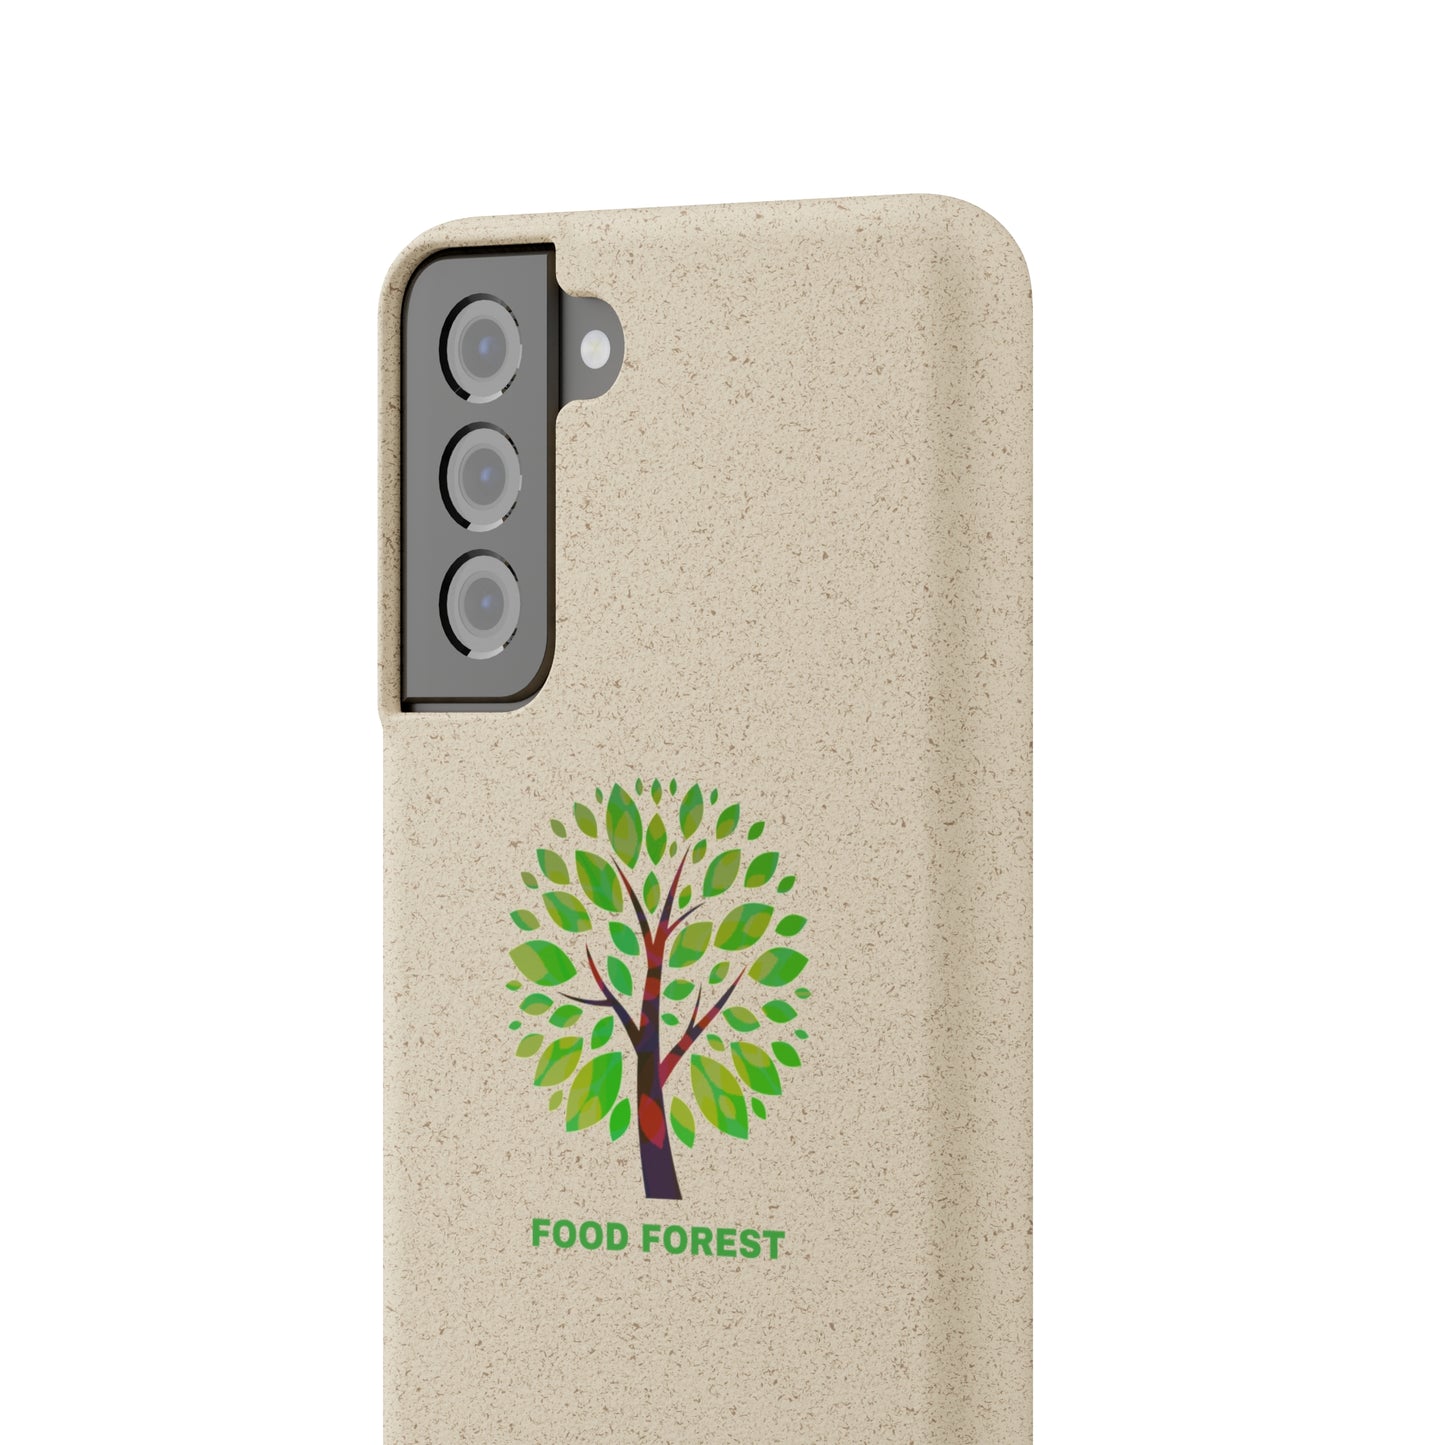 Biodegradable Samsung Cases, FOOD FOREST